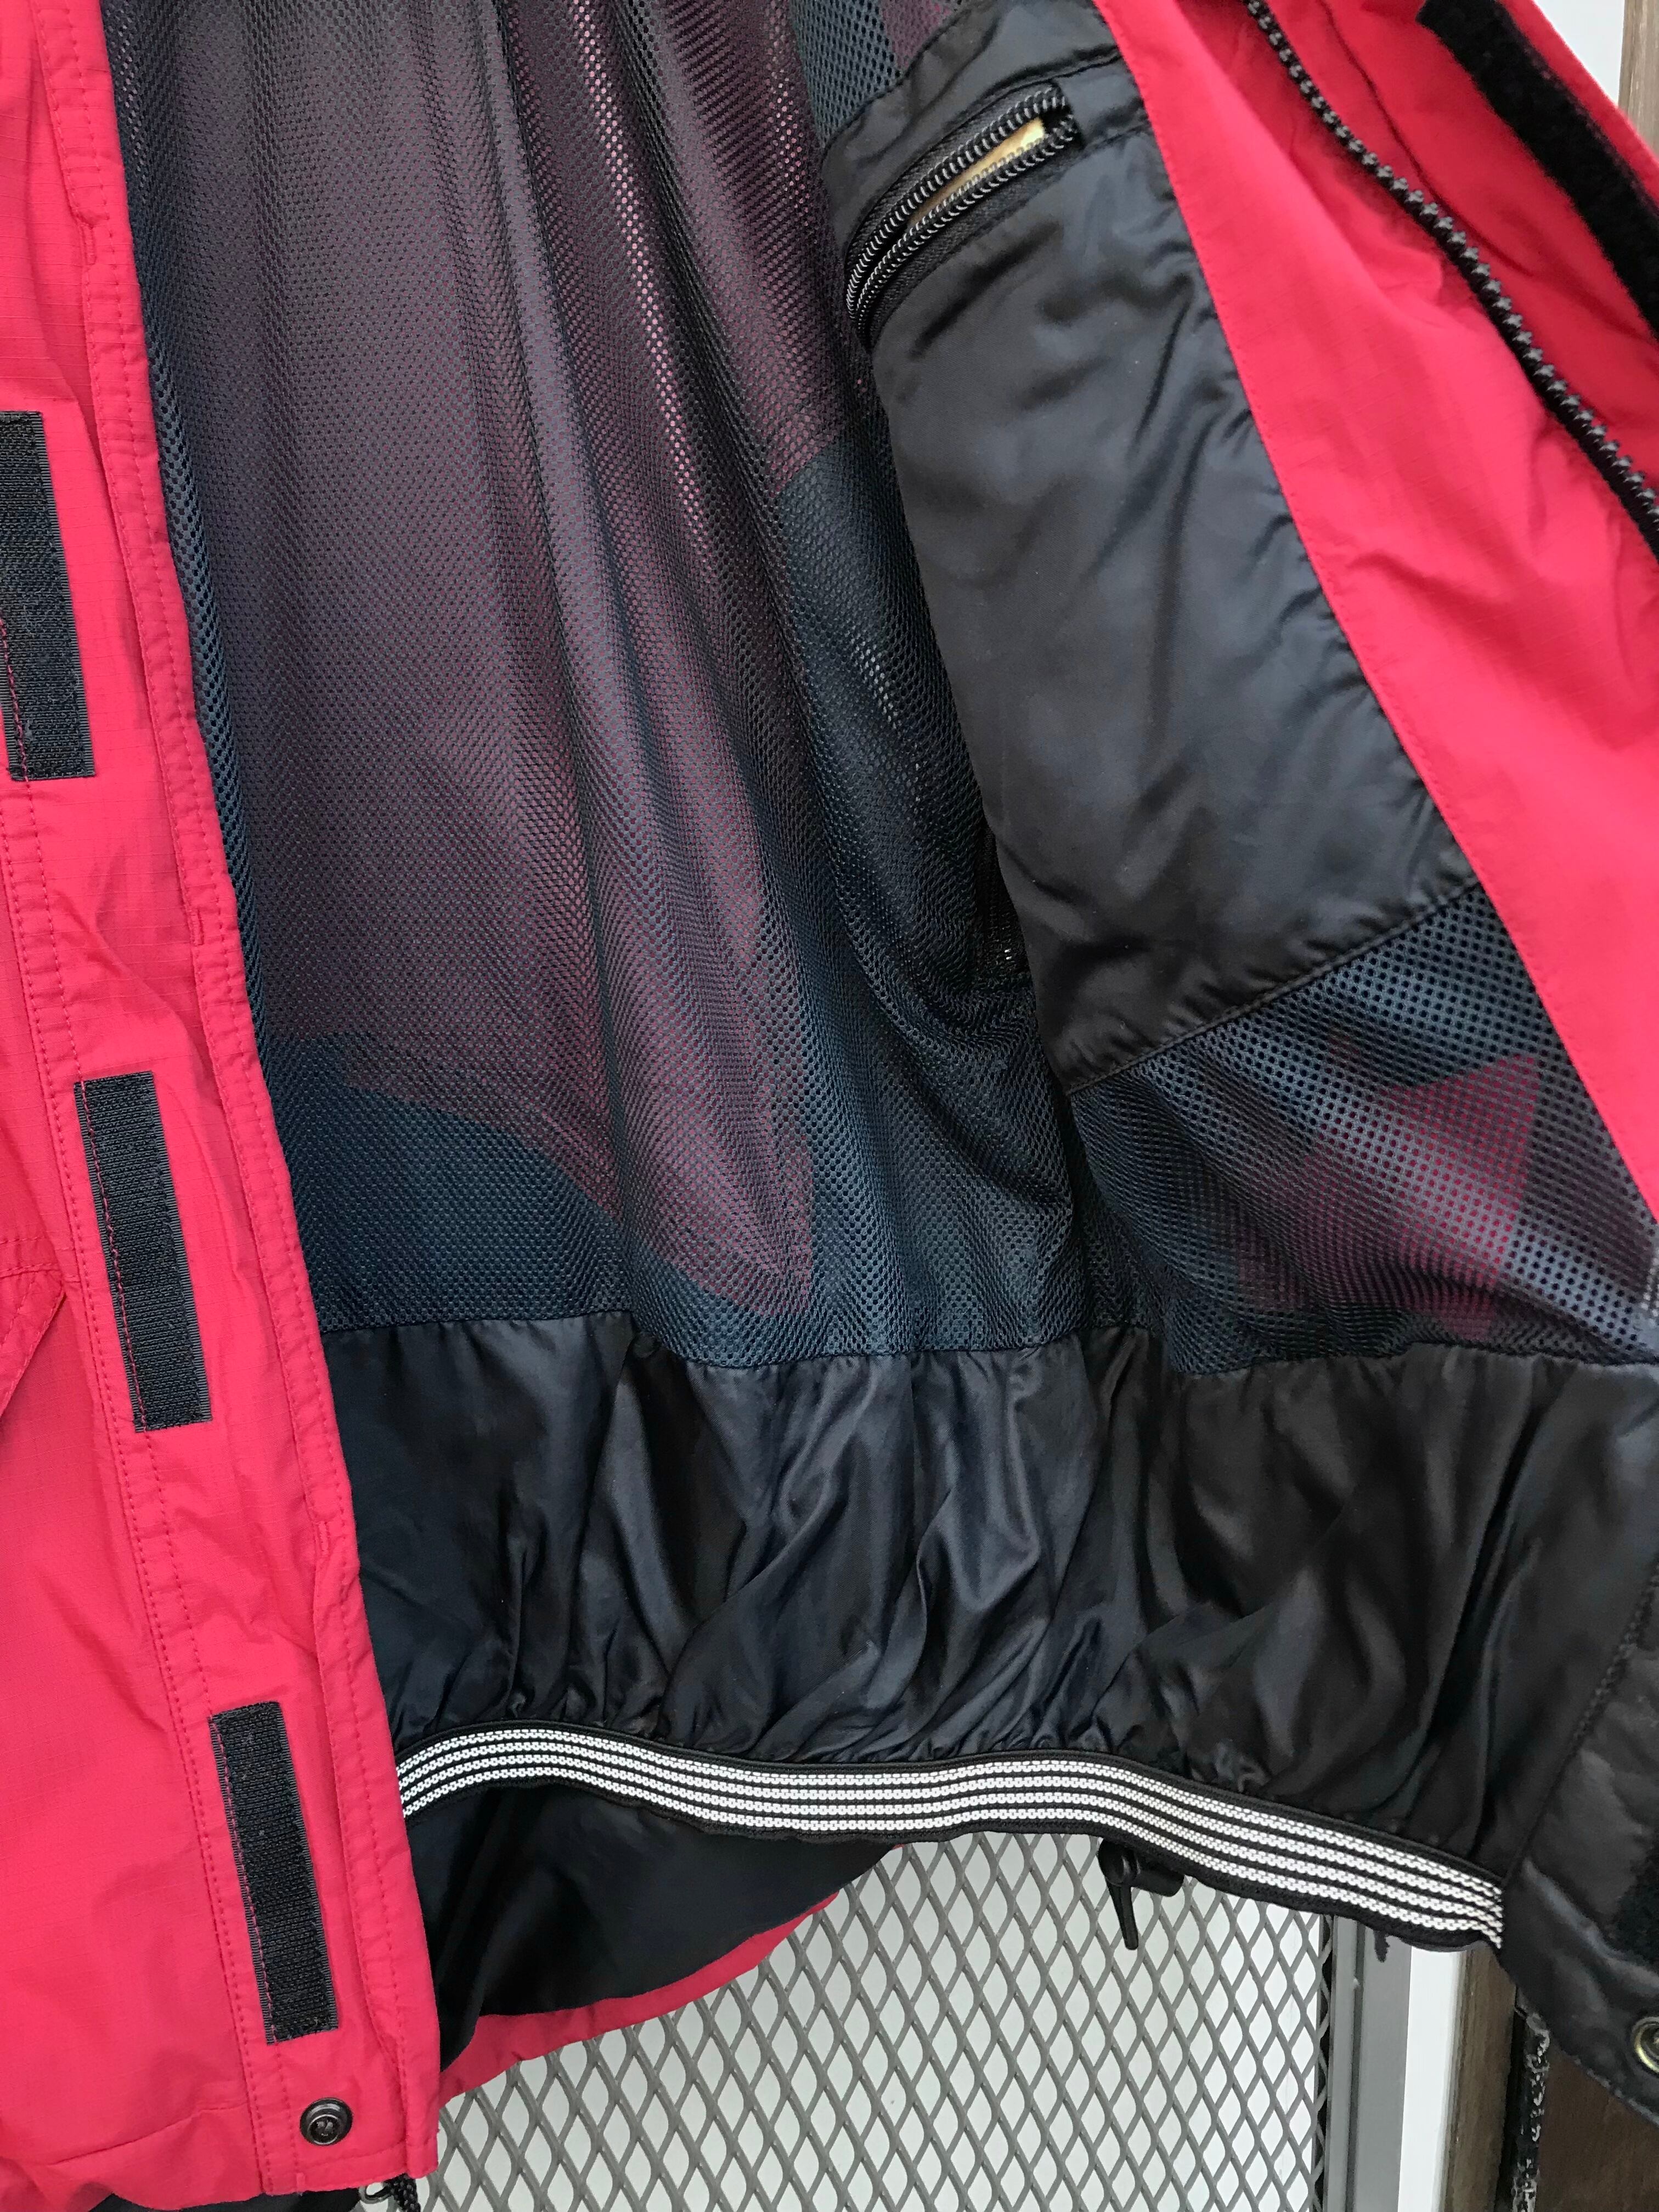 1990 OLDノースフェイスRTG mendenhal jacket